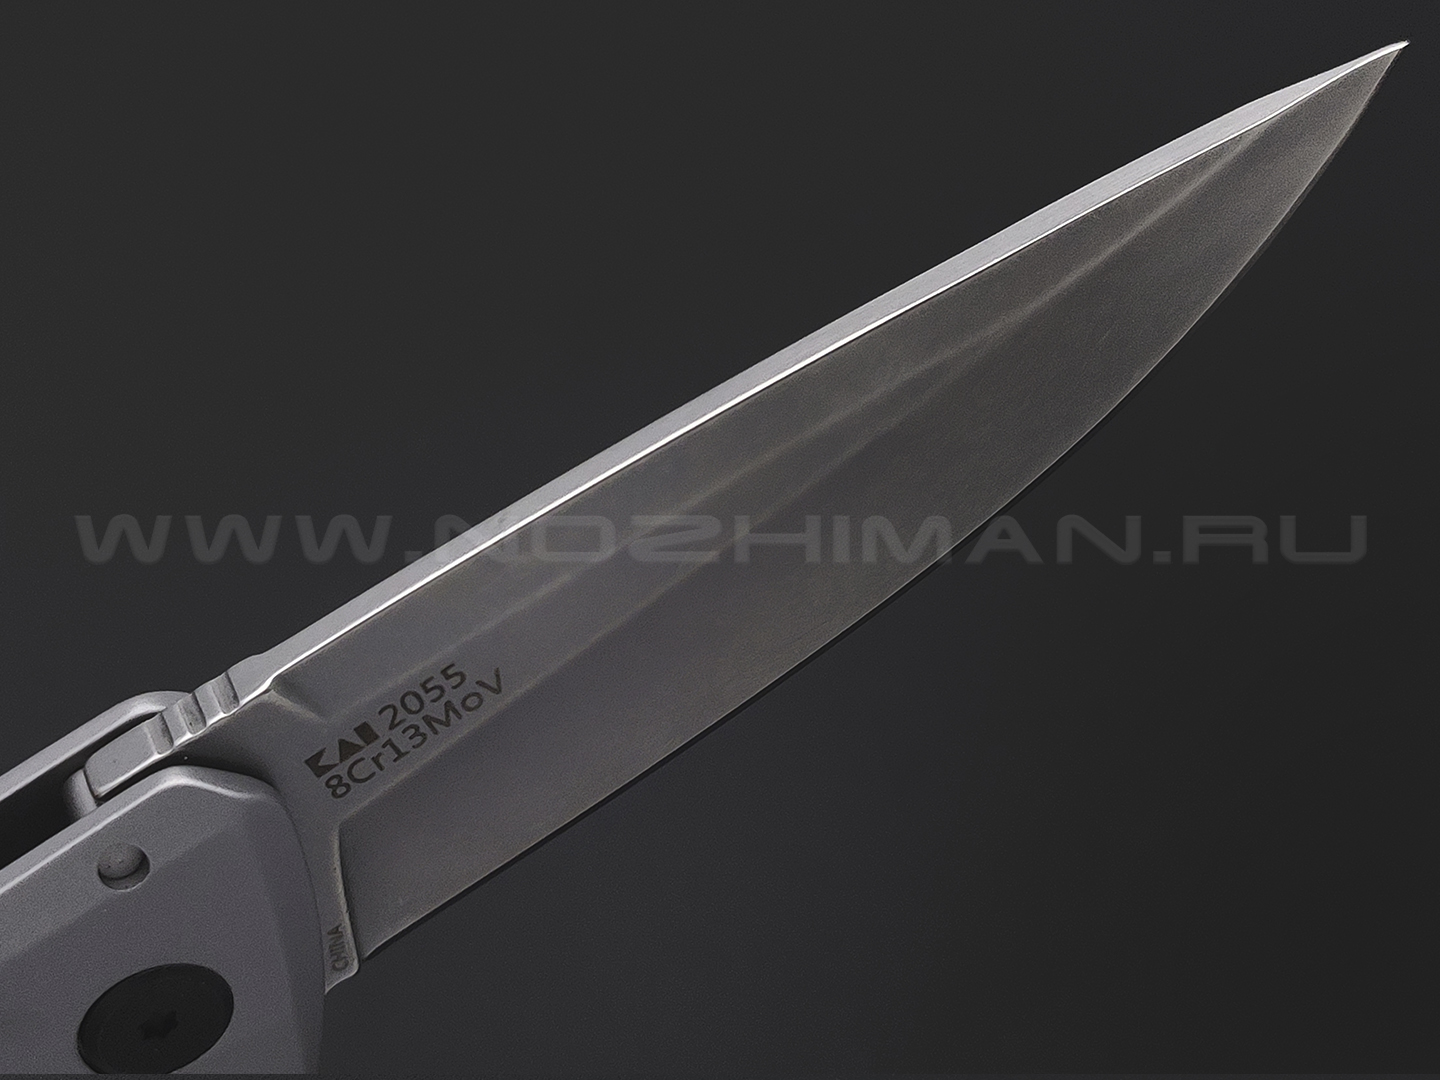 Нож Kershaw Comeback 2055 сталь 8Cr13MoV, рукоять Stainless steel